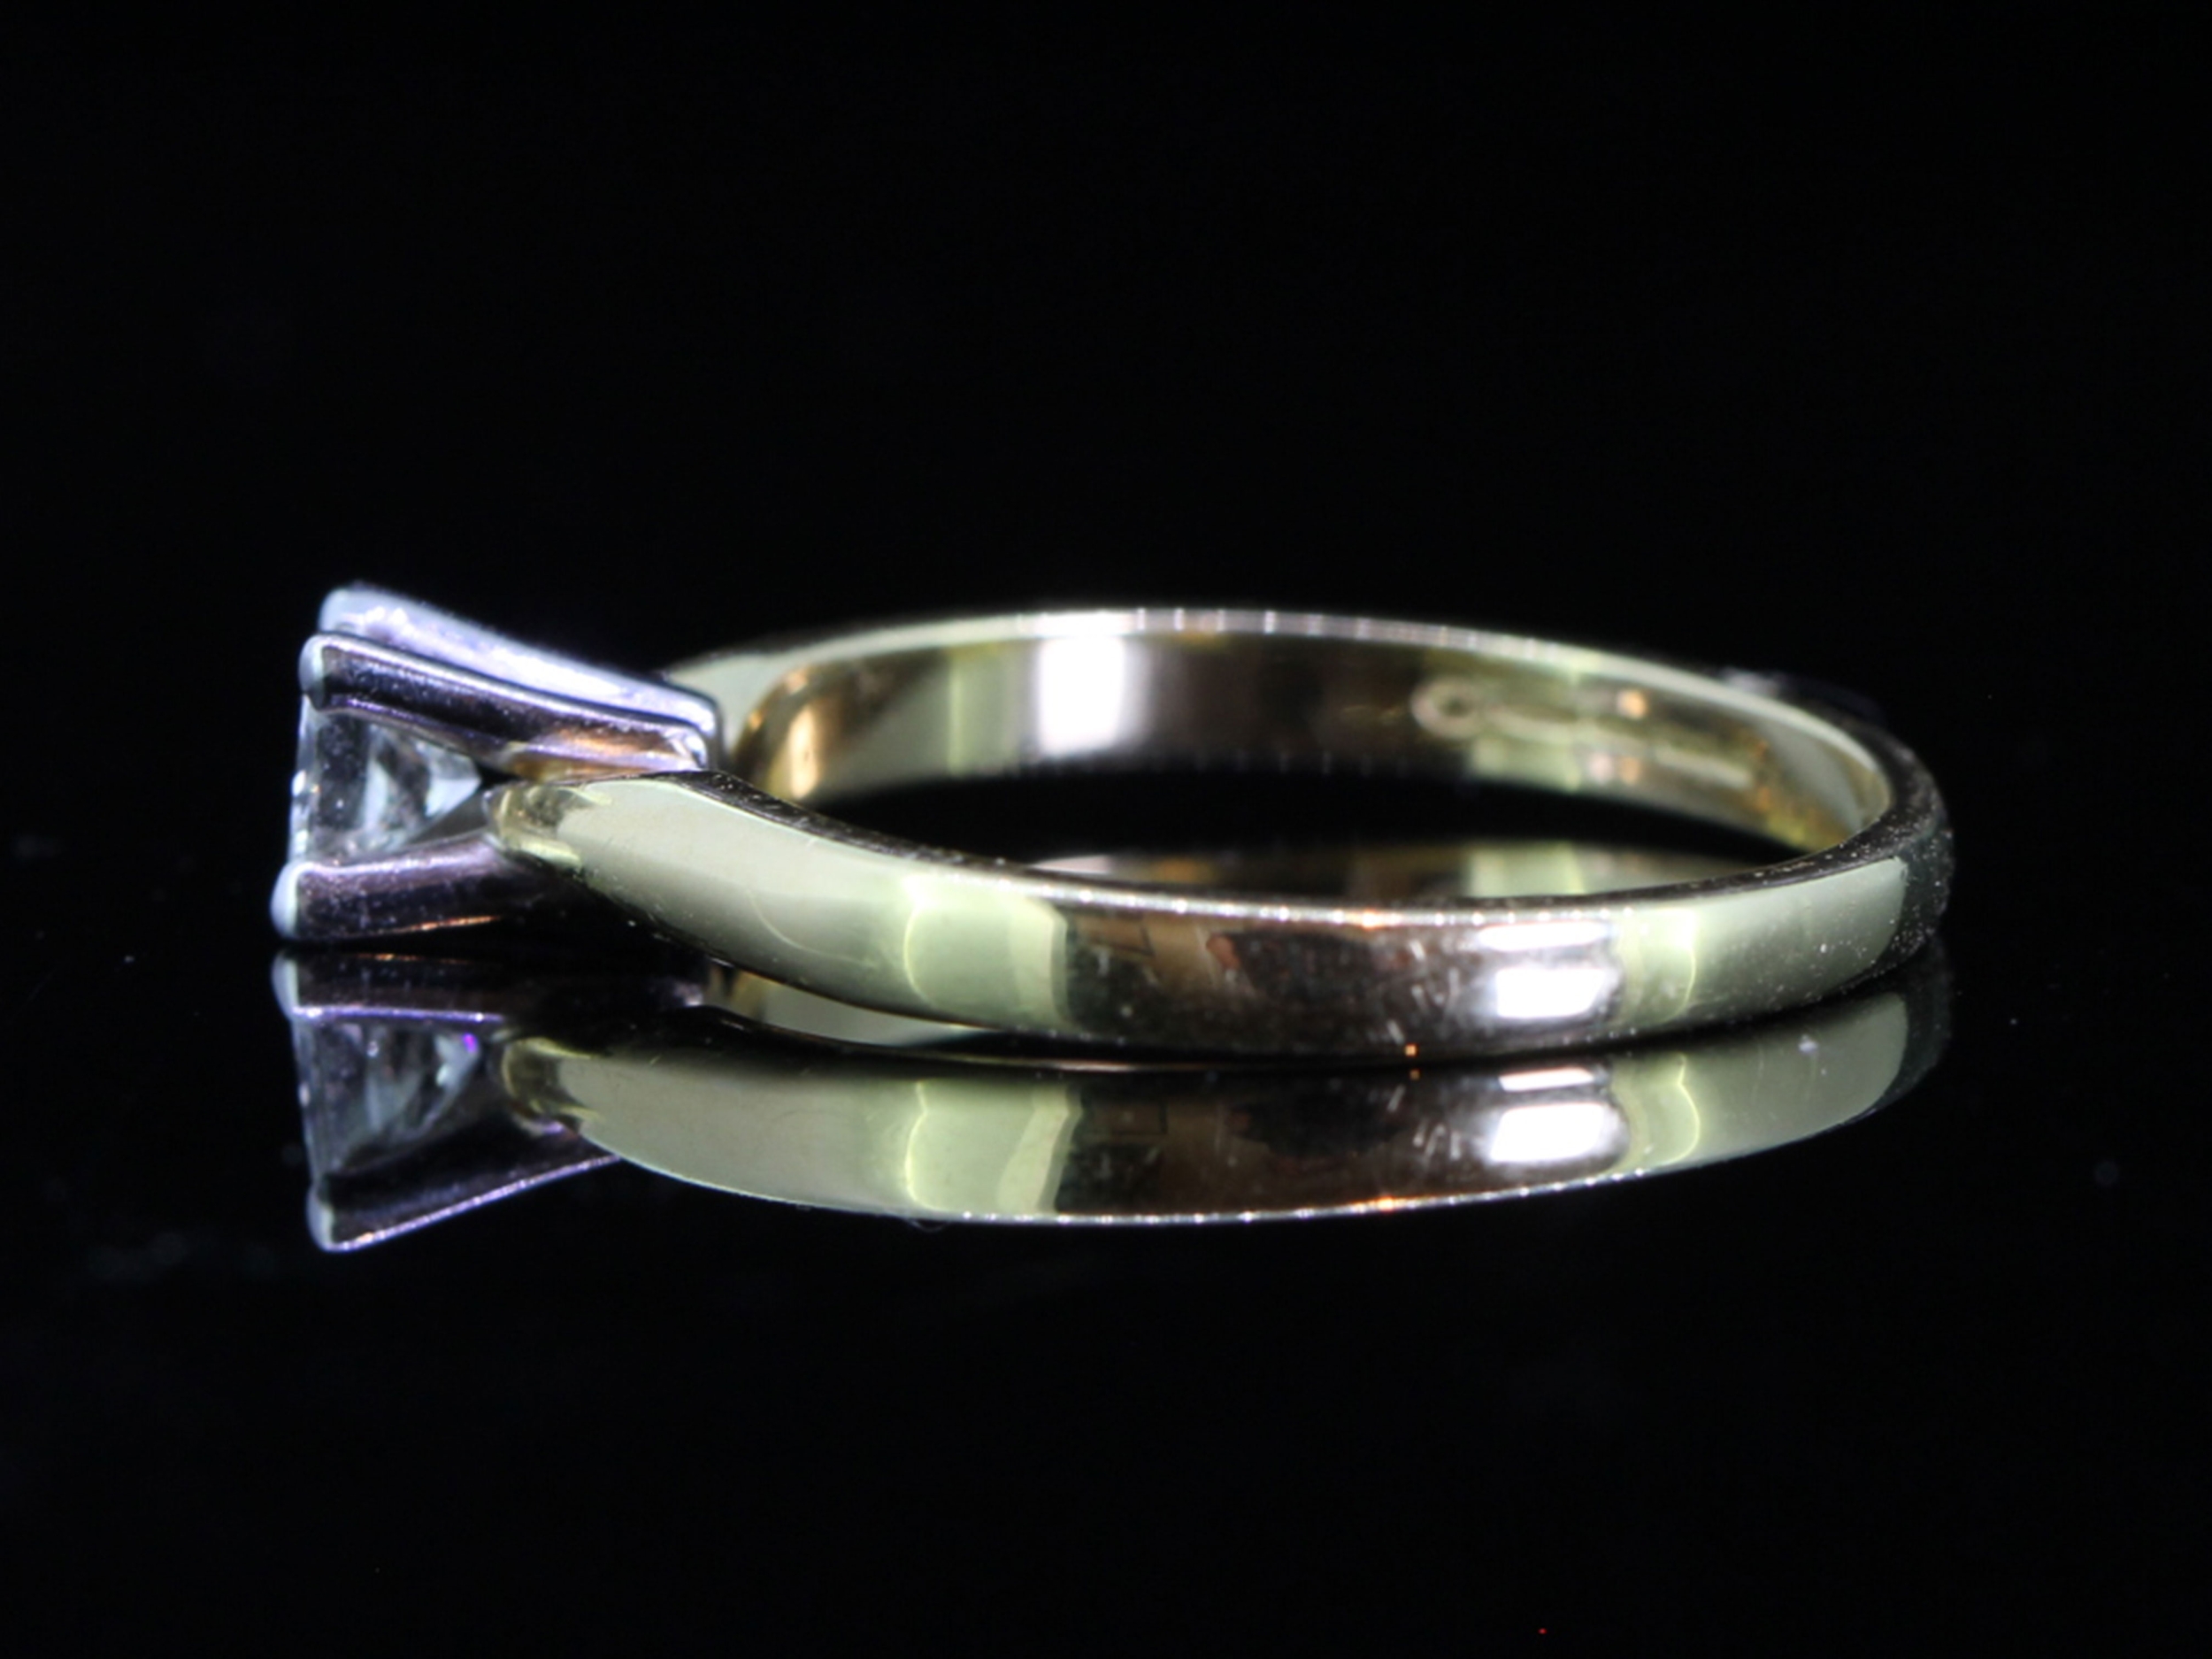 Beautiful Princess Cut Diamond 18  Carat Gold  Solitaire Ring